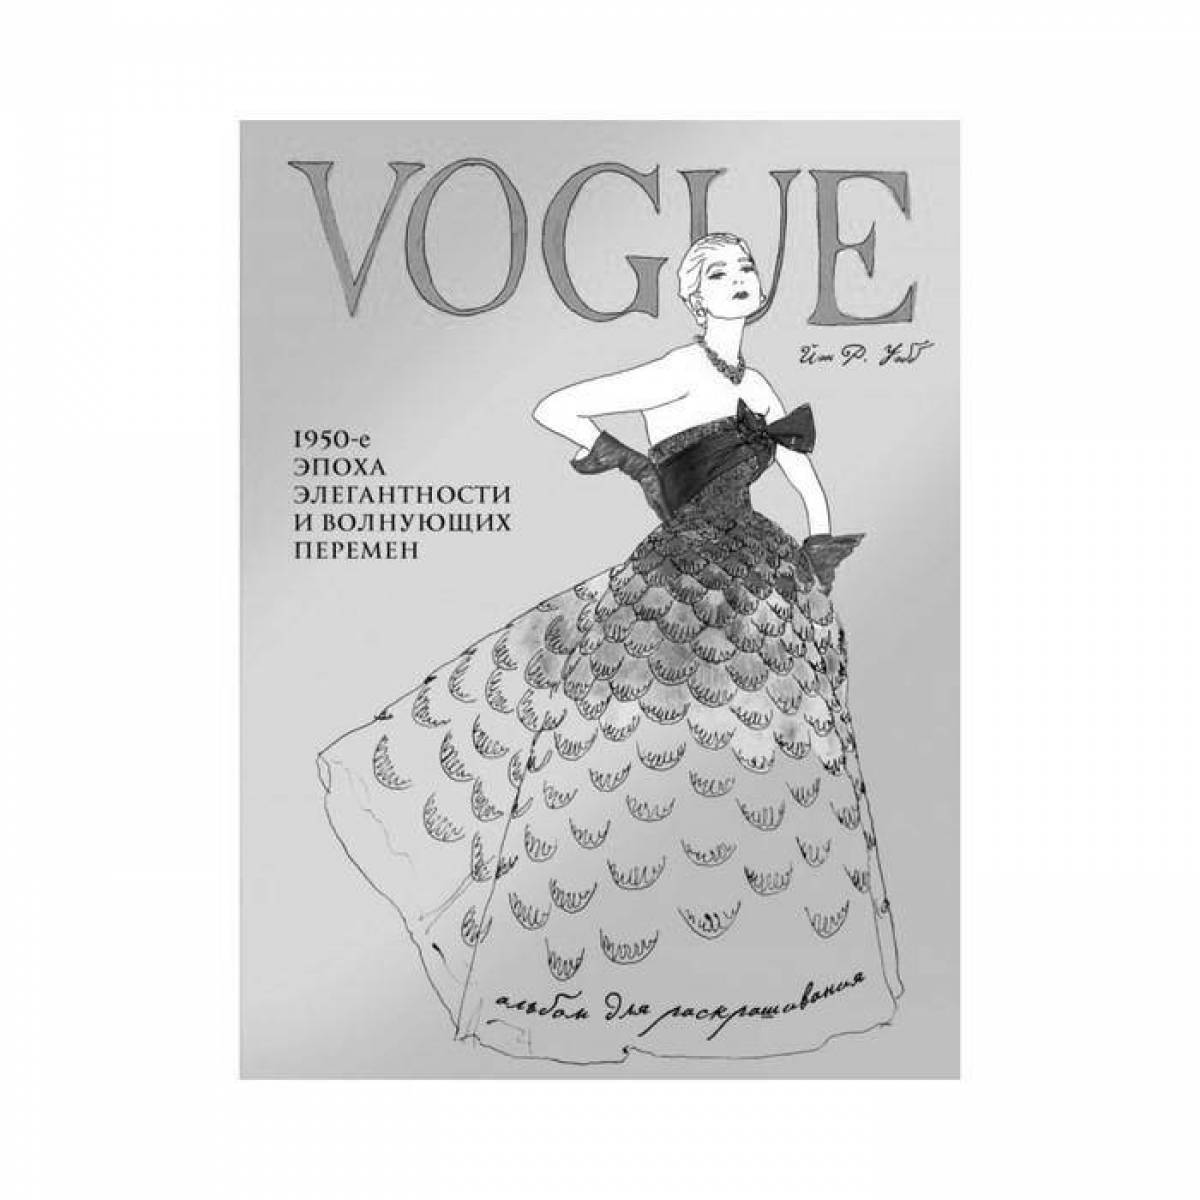 Vogue surreal coloring book